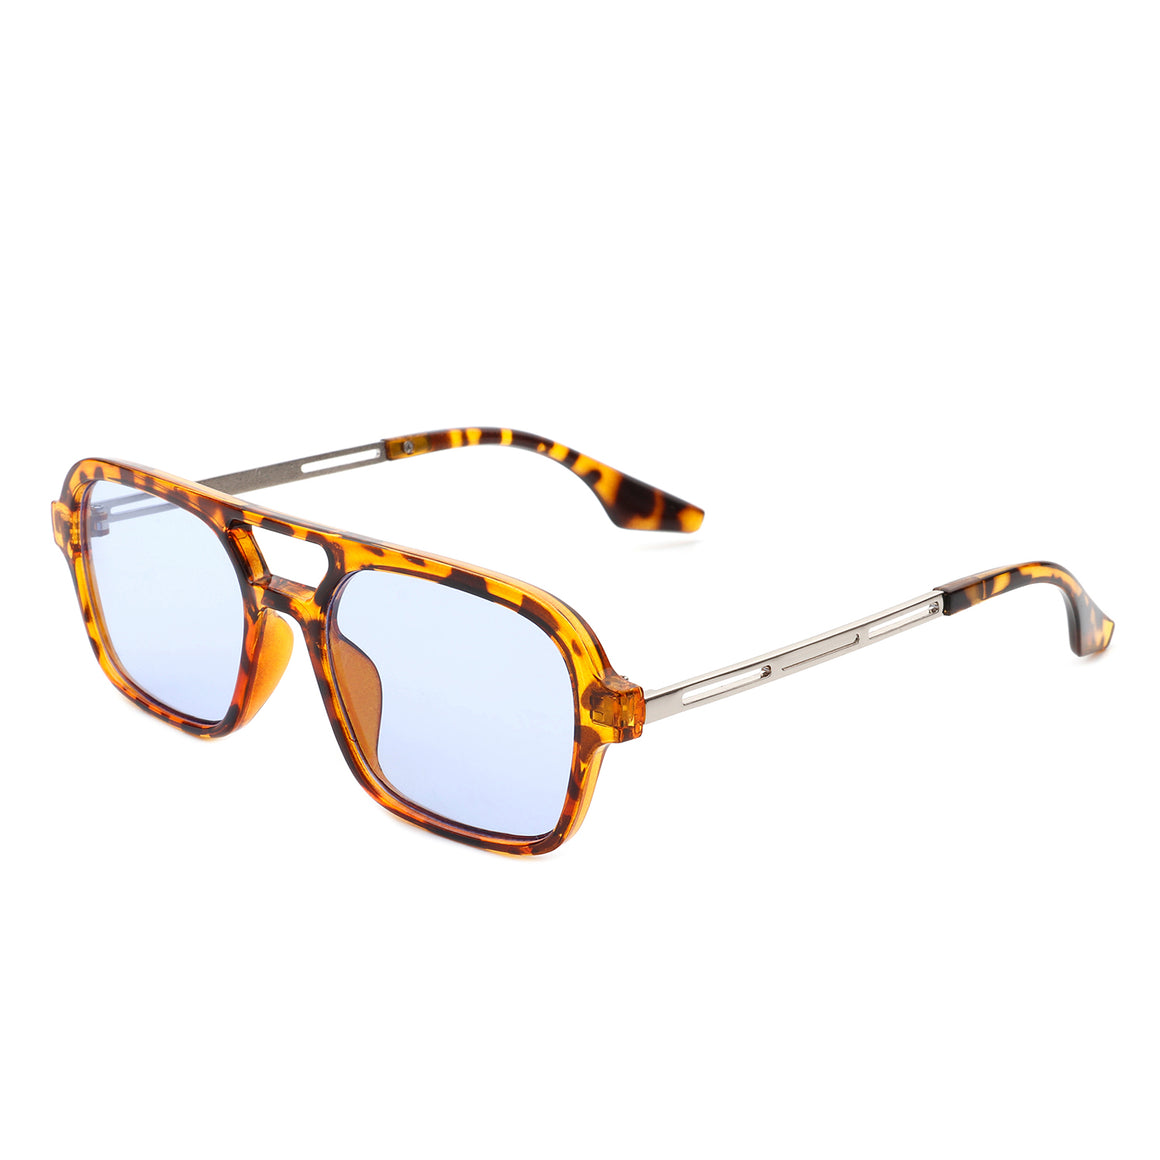 Candorae - Retro Square Brow-Bar Fashion Aviator Style Vintage Sunglasses